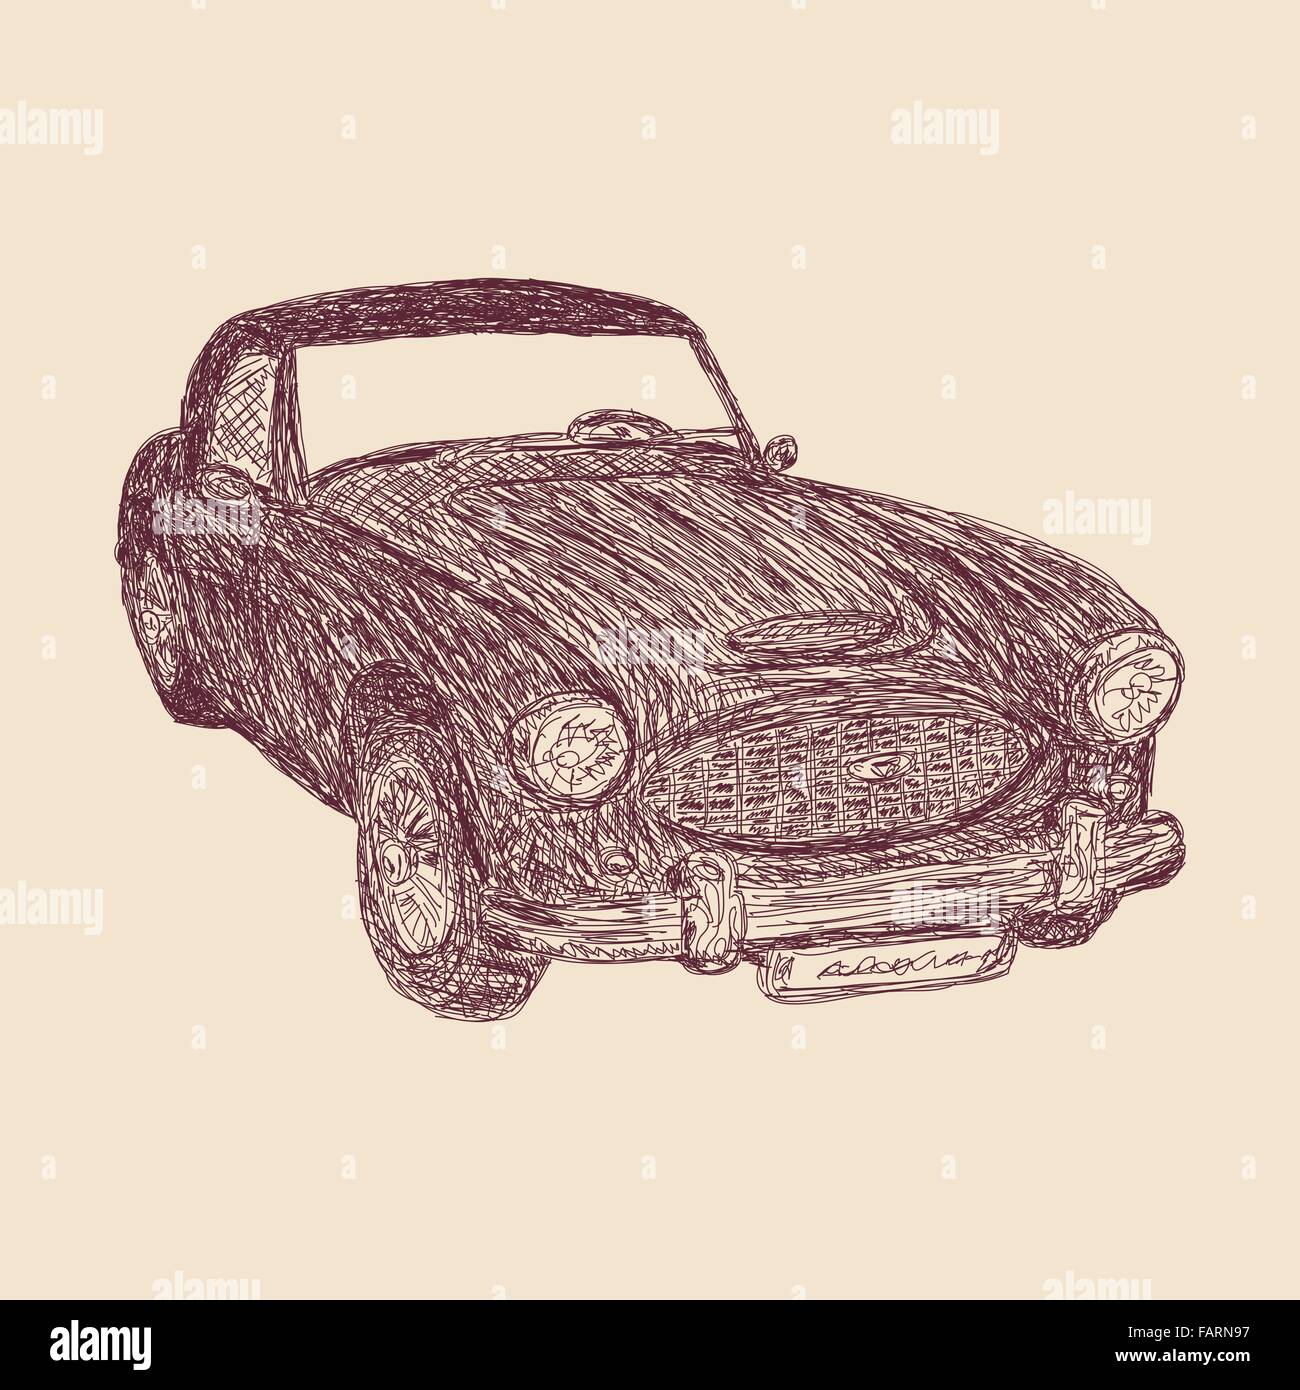 https://c8.alamy.com/comp/FARN97/retro-car-sketch-vector-illustration-FARN97.jpg